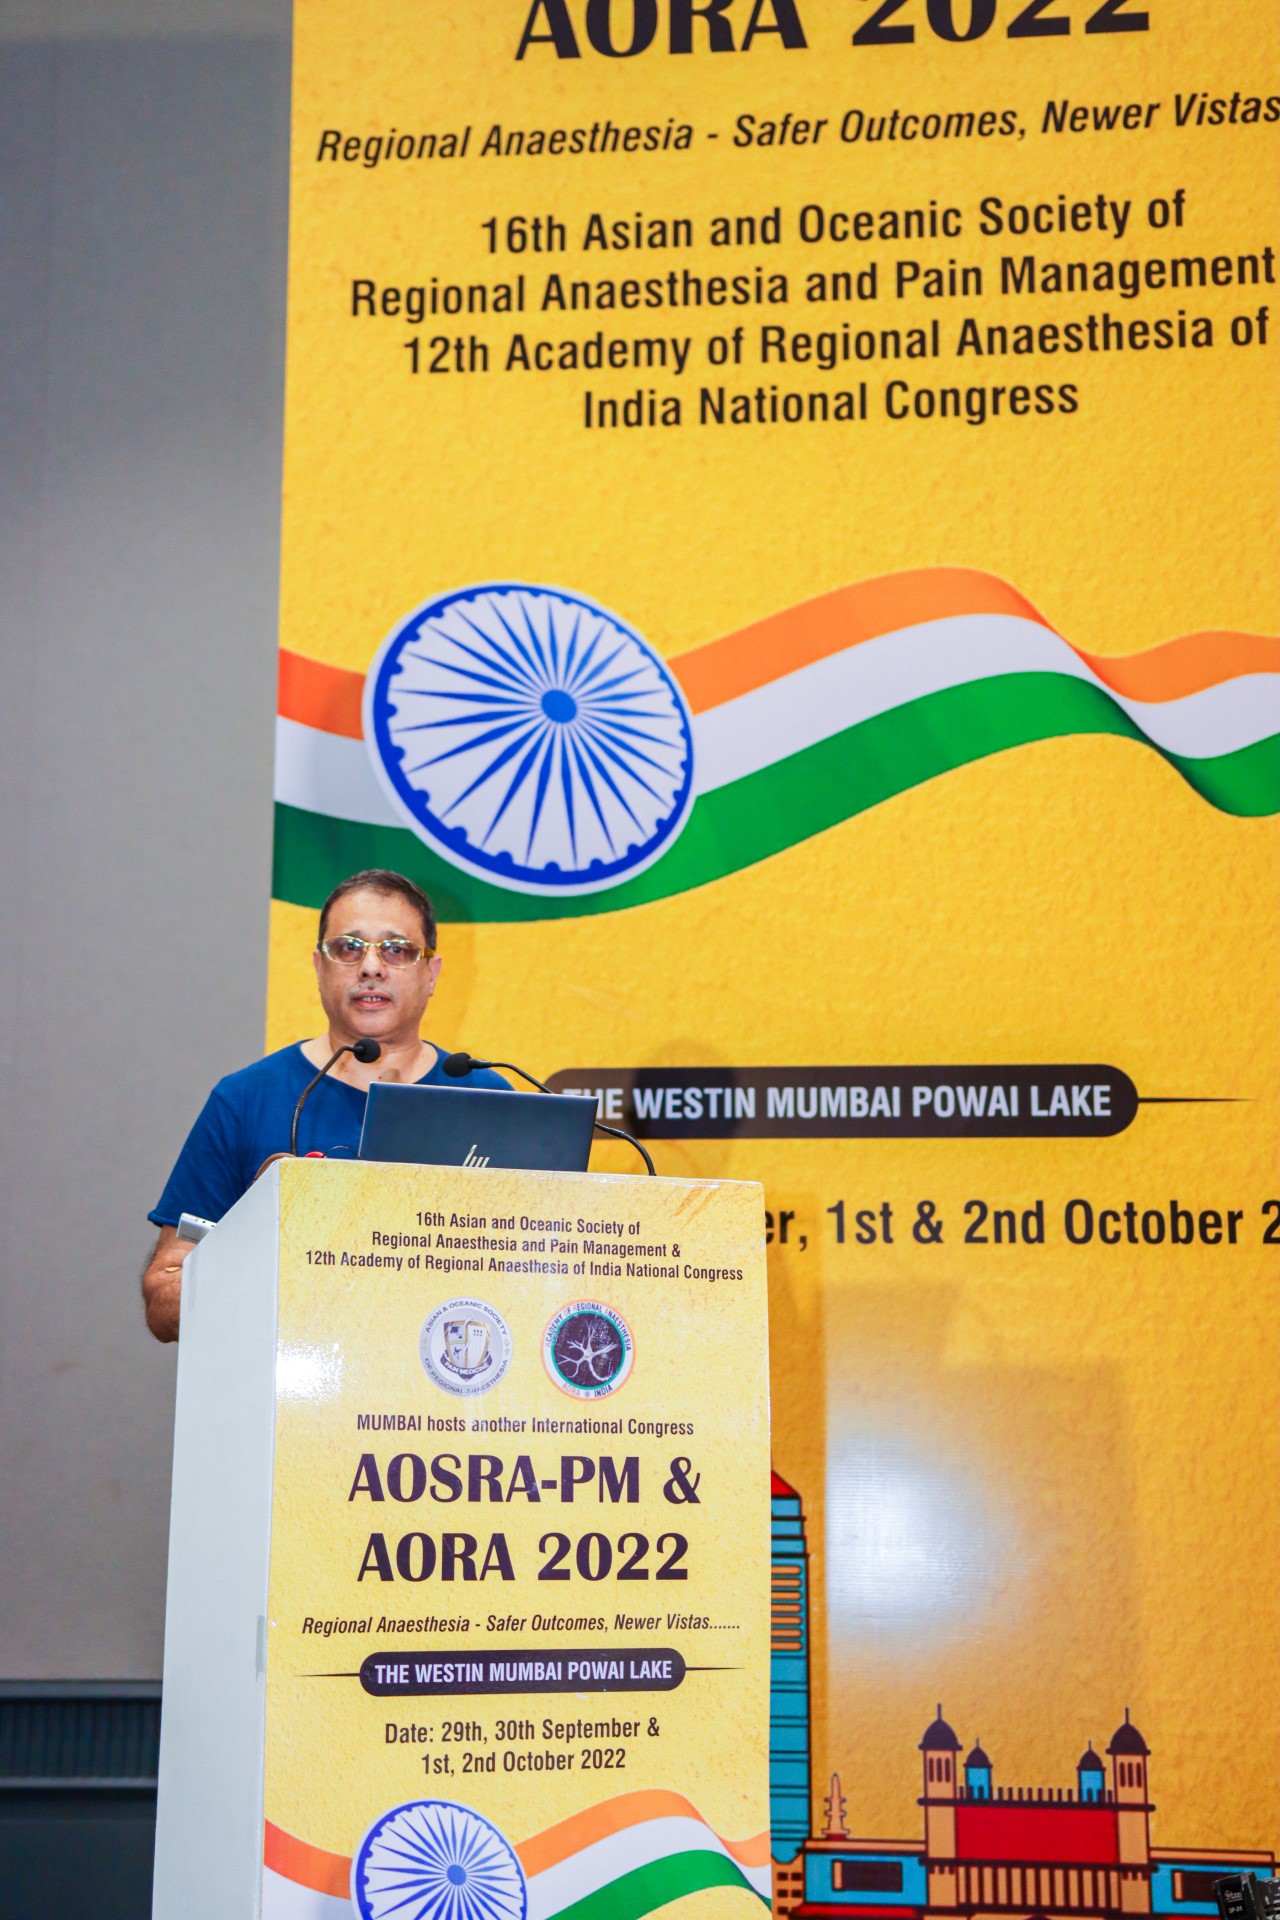 AORA INDIA - THE FUNDAMENTALS OF REGIONALL ANESTHESIA